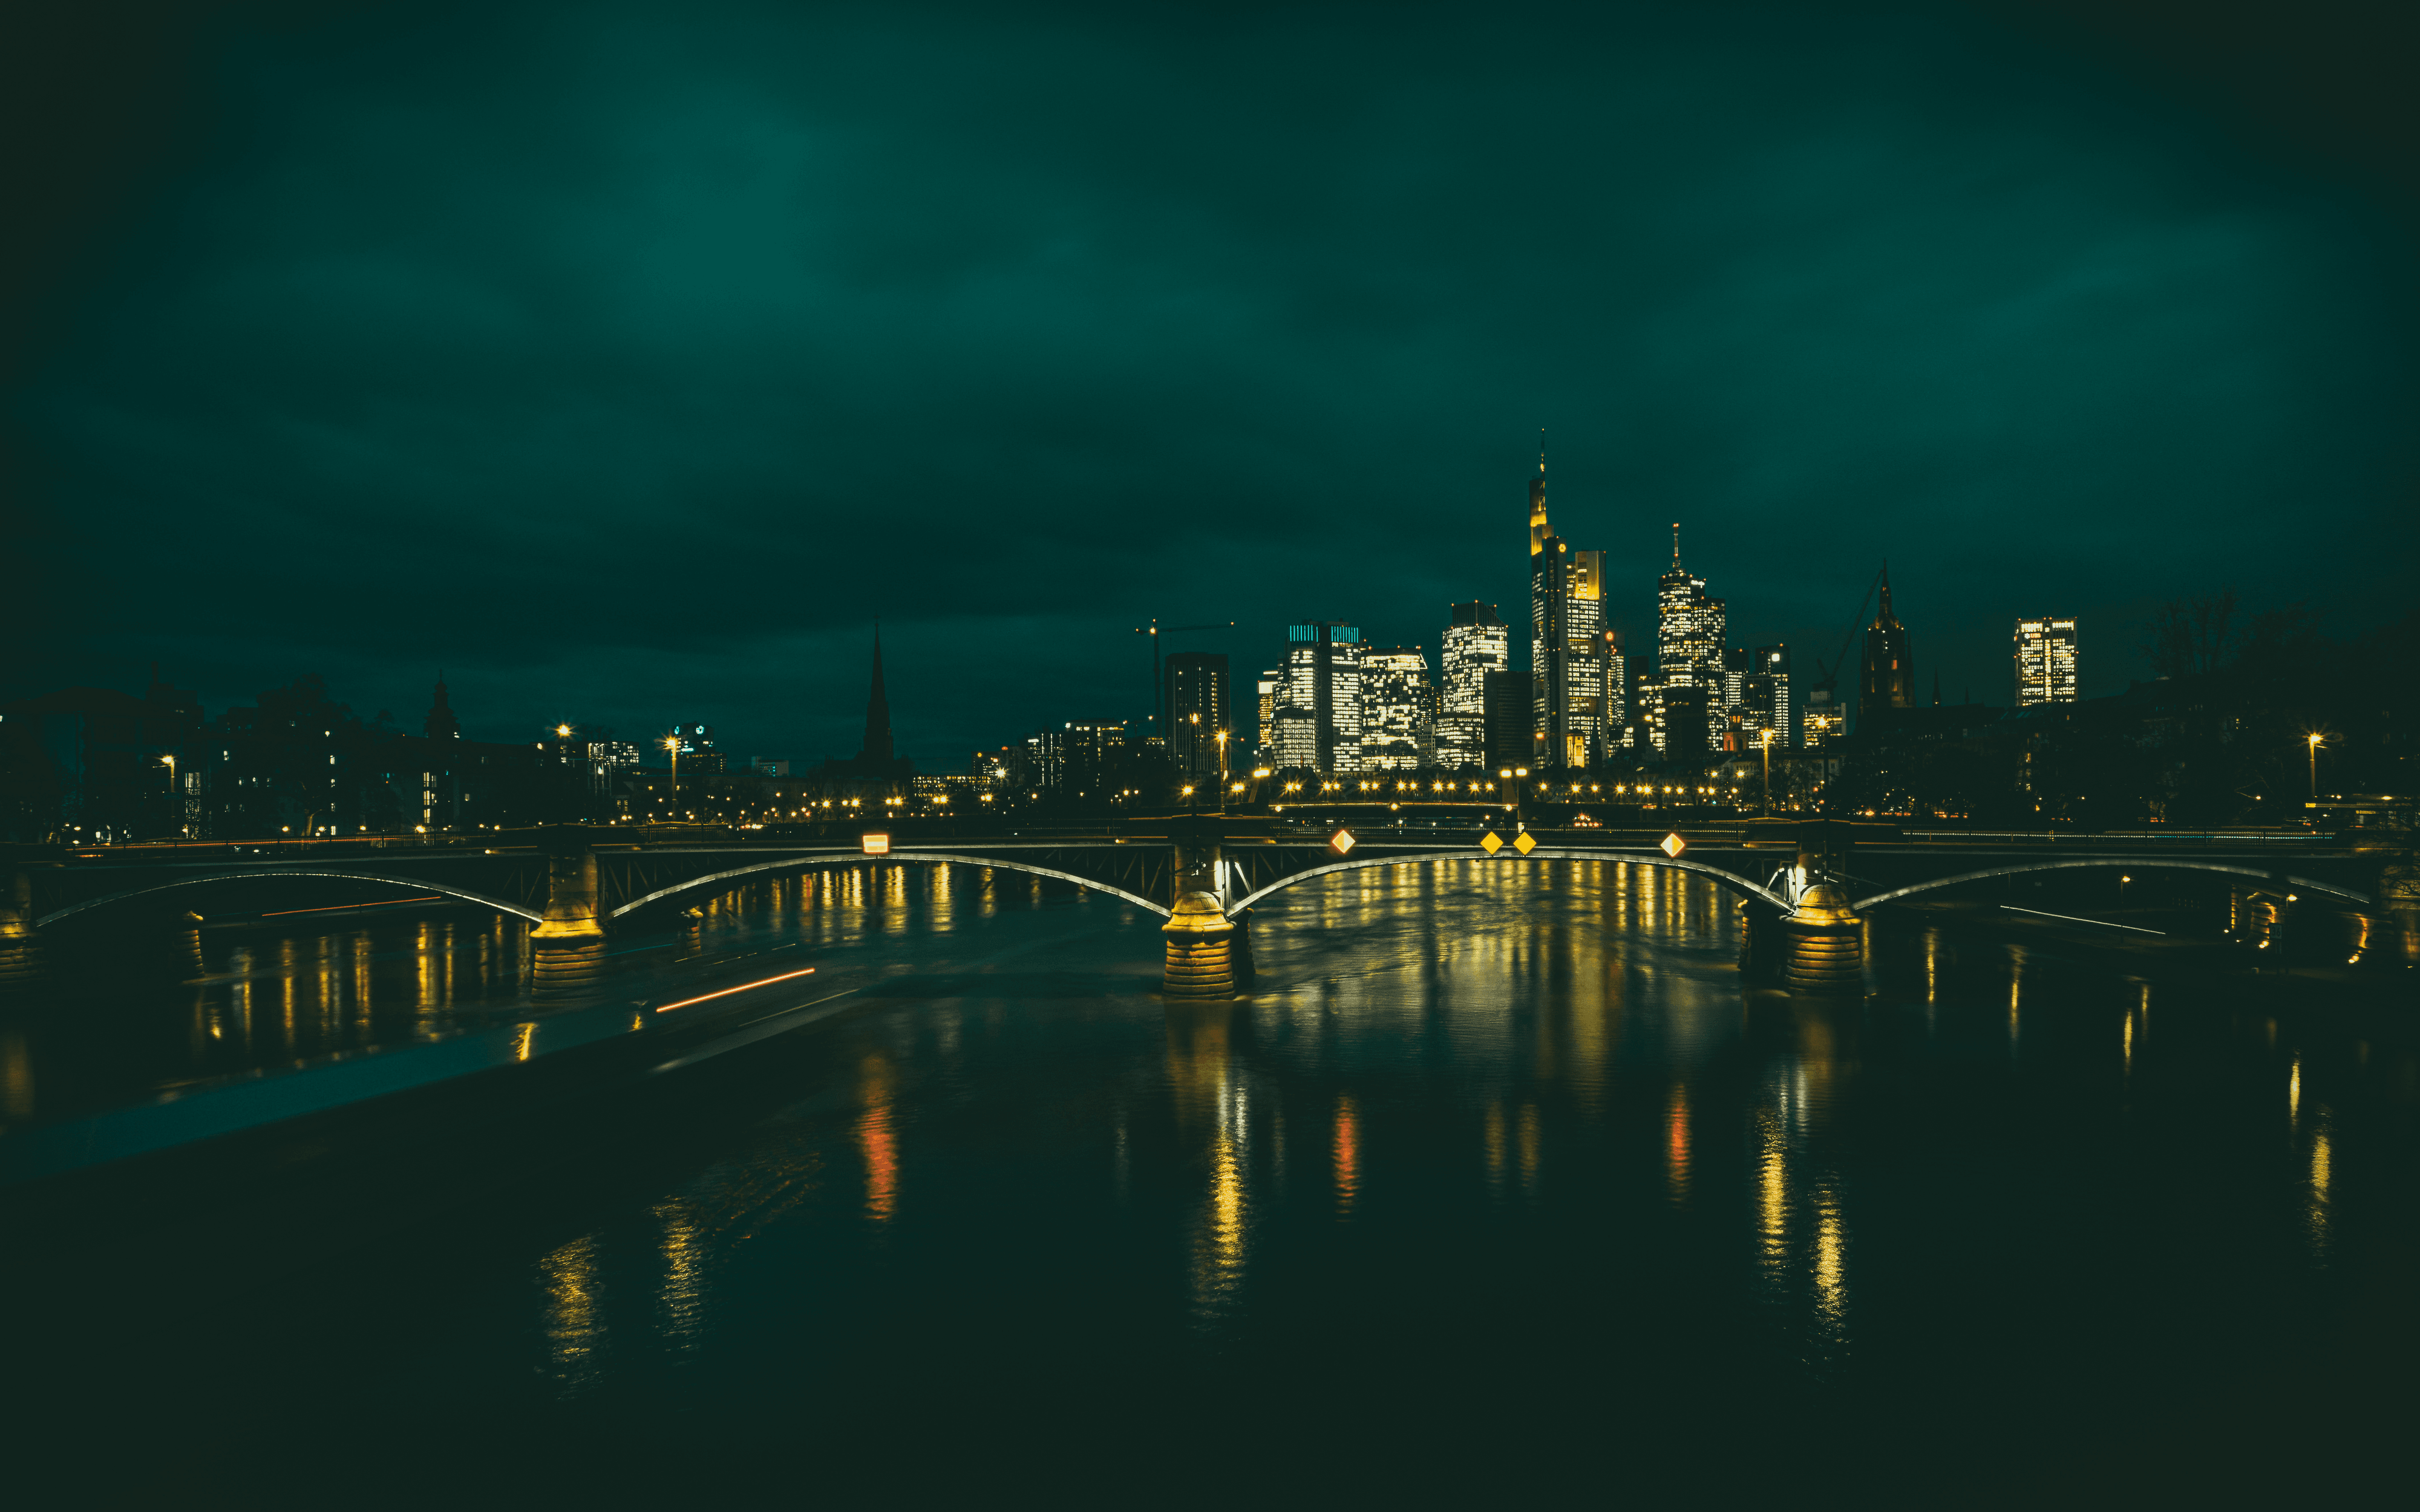 The lights of Frankfurt am Main